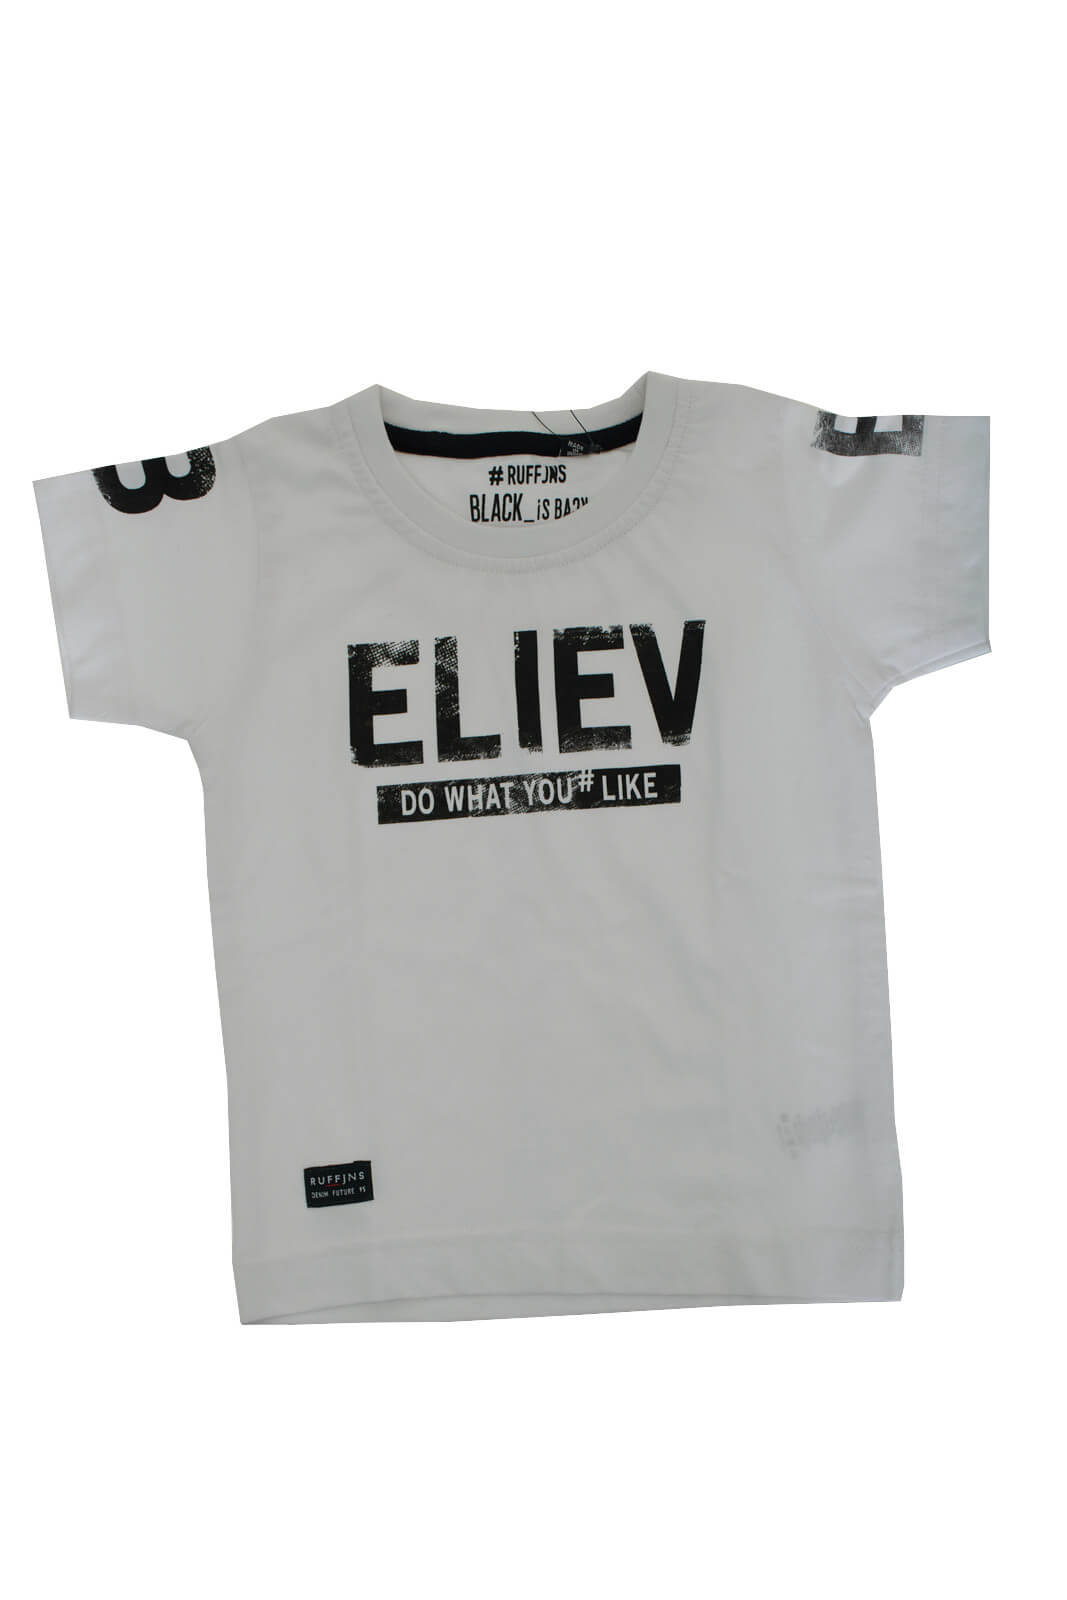 Ruff JNS T-Shirt Bambino KB10297G